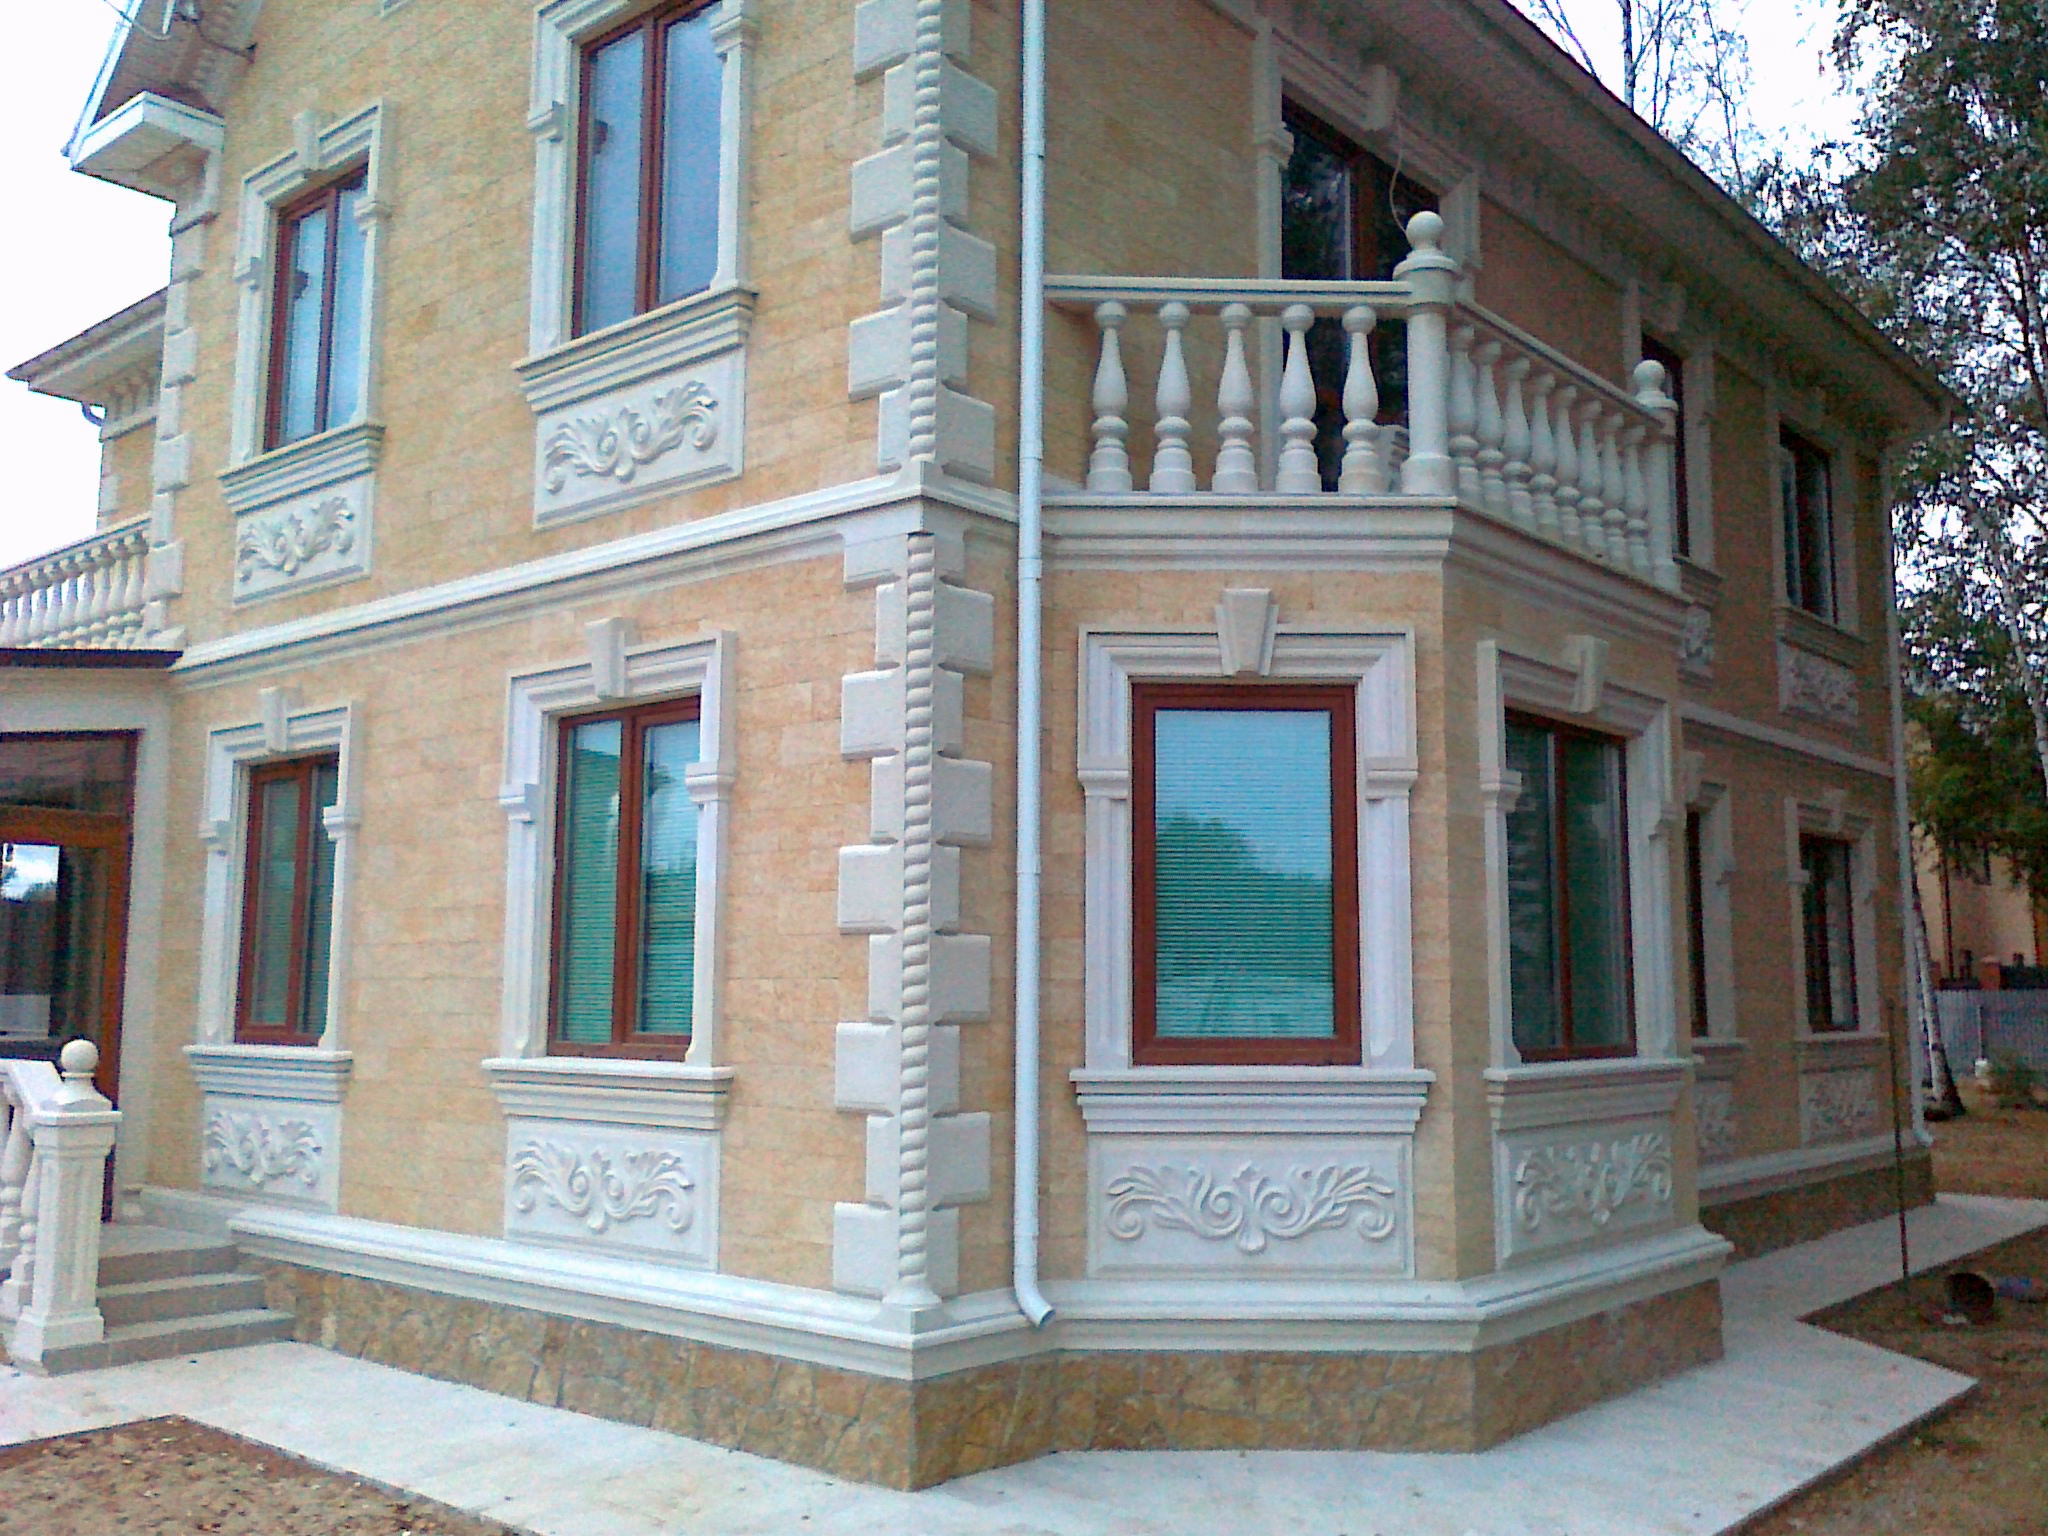 Дизайн оформления фасада дома